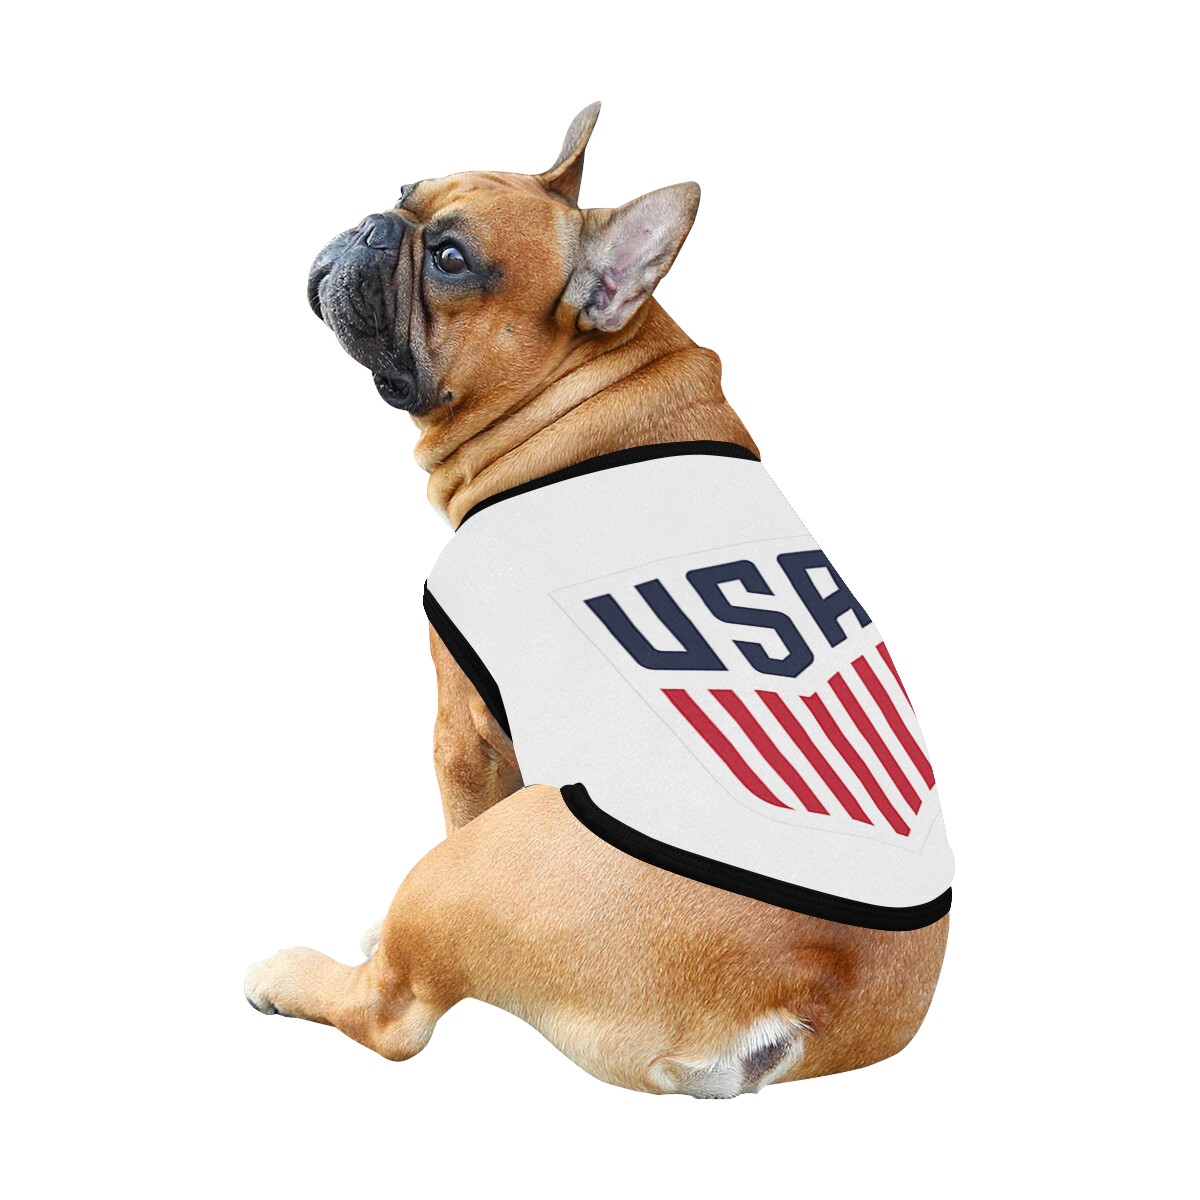 🐕 ⚽️ USA, Soccer Team, Dog t-shirt, Dog Tank Top, Dog shirt, Dog clothes, Dog jersey, Gift, 7 sizes XS to 3XL, American, I love sports, white